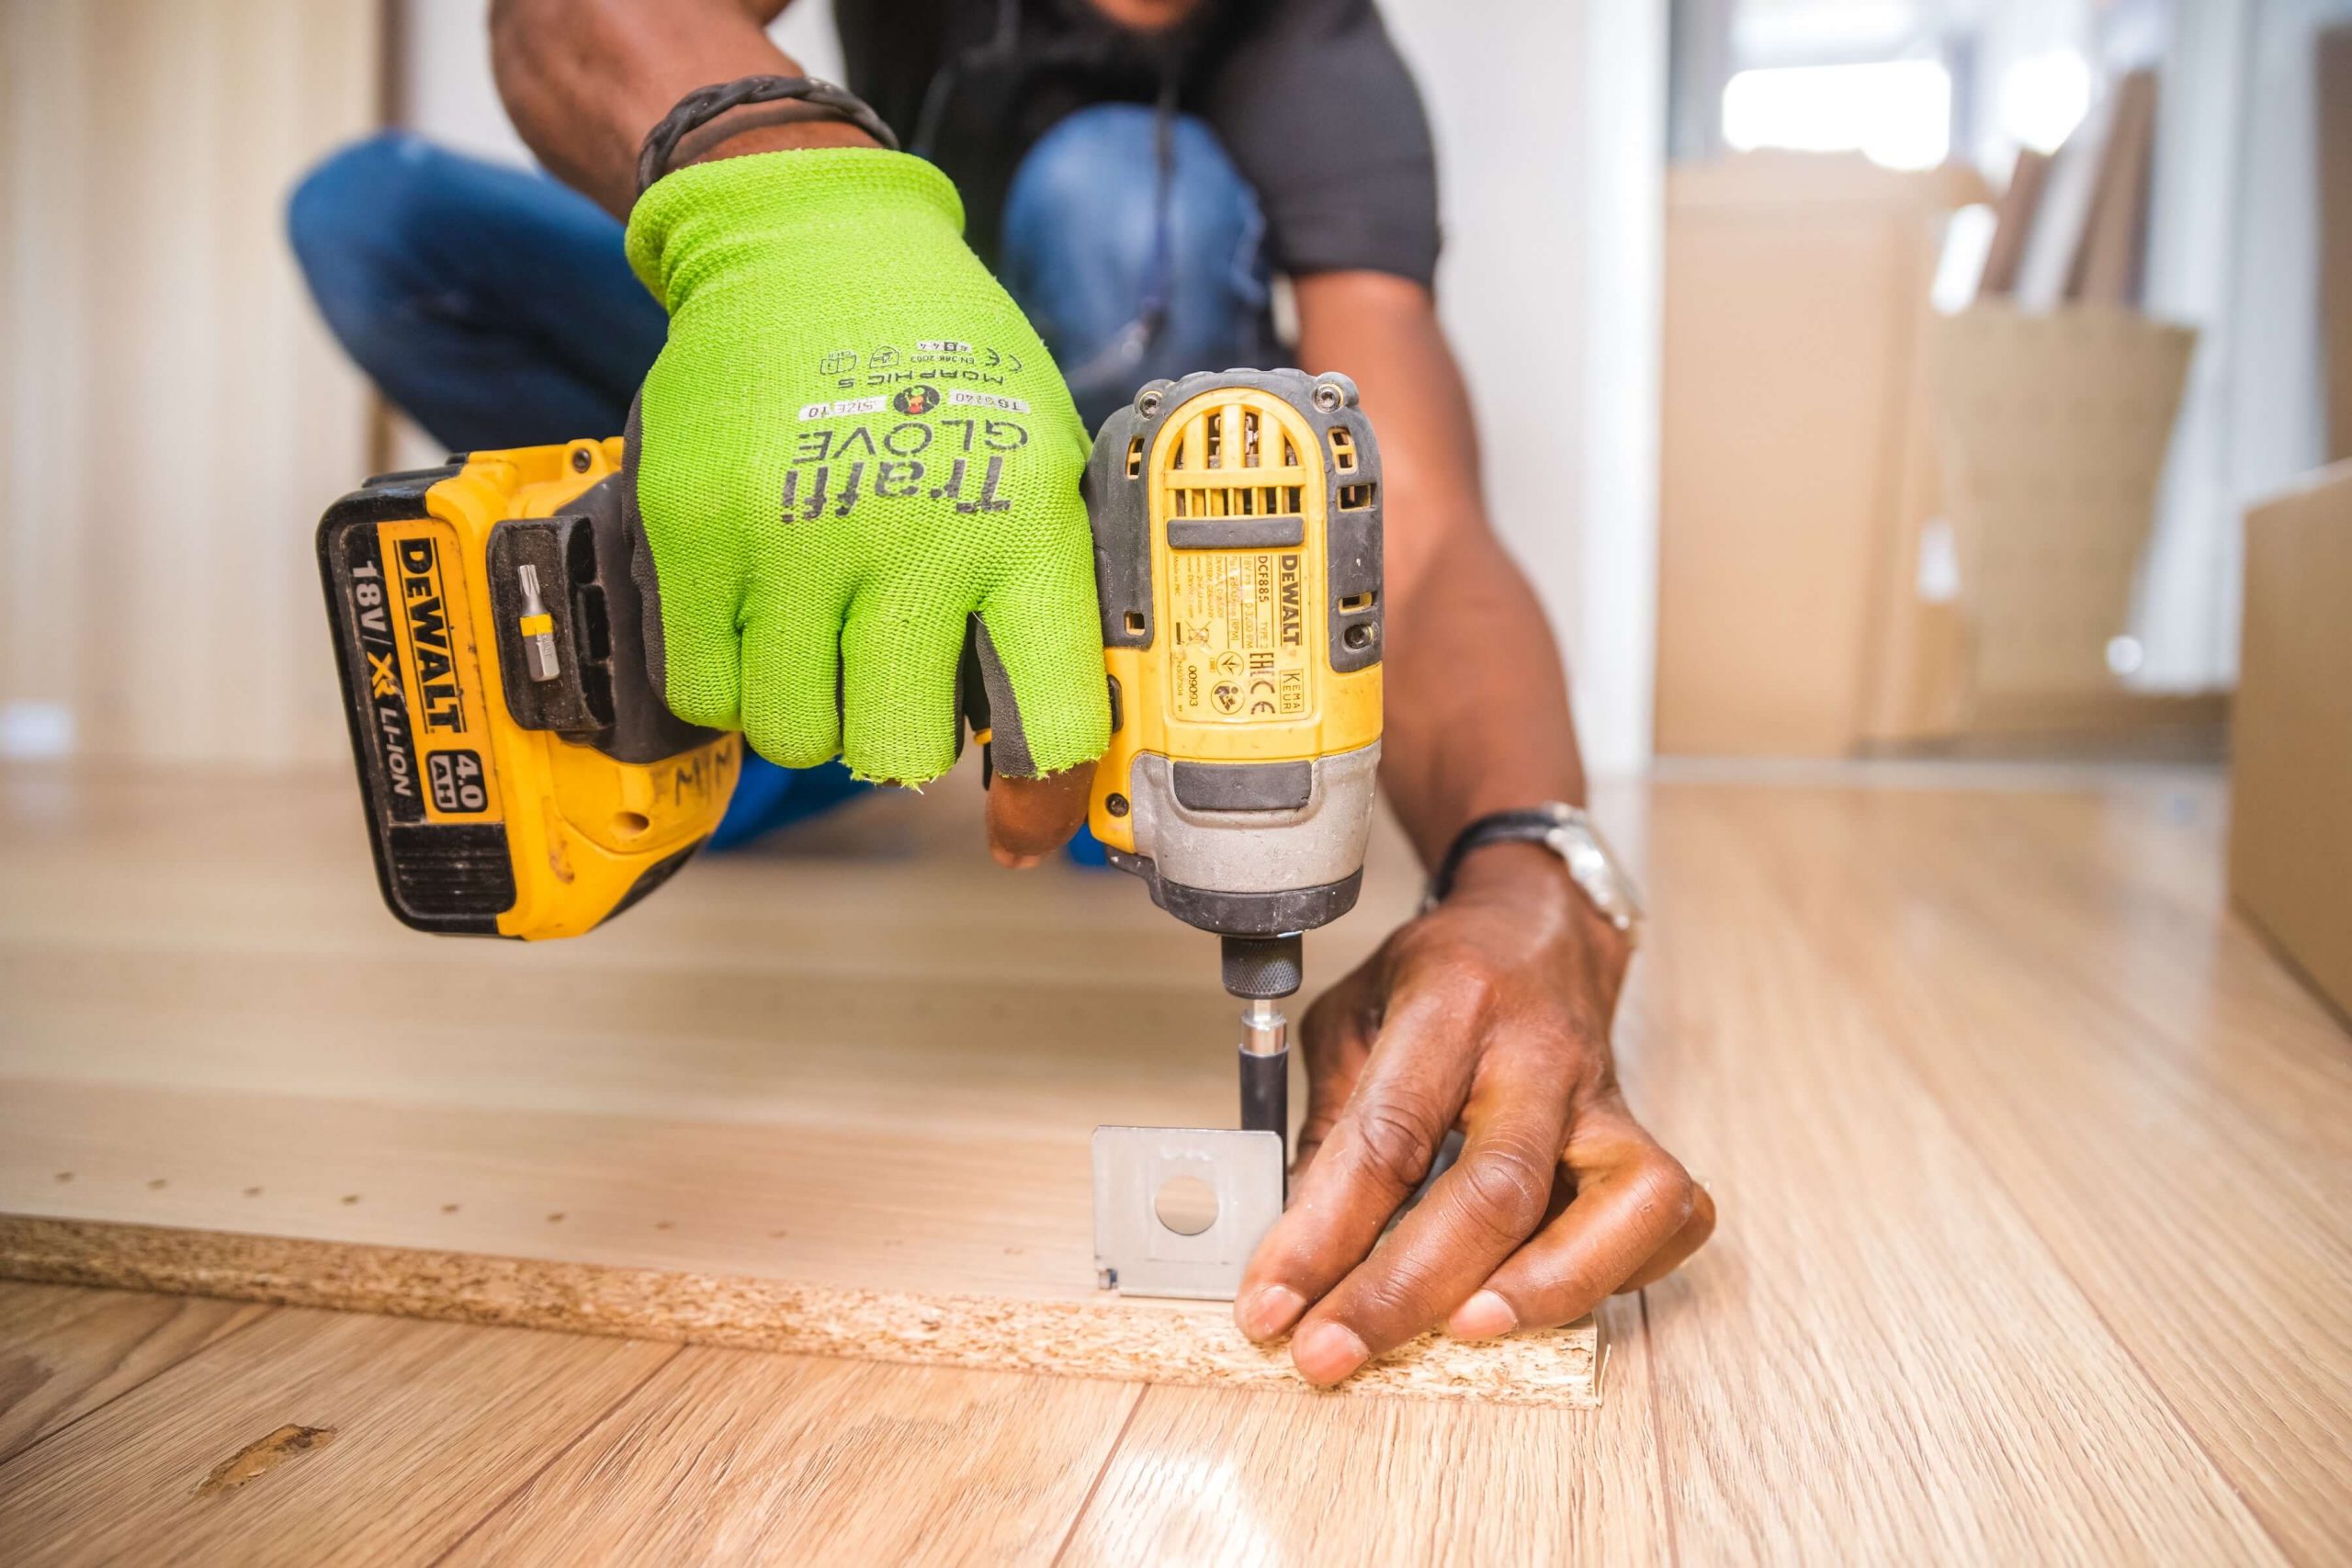 Handyman Carpentry Services